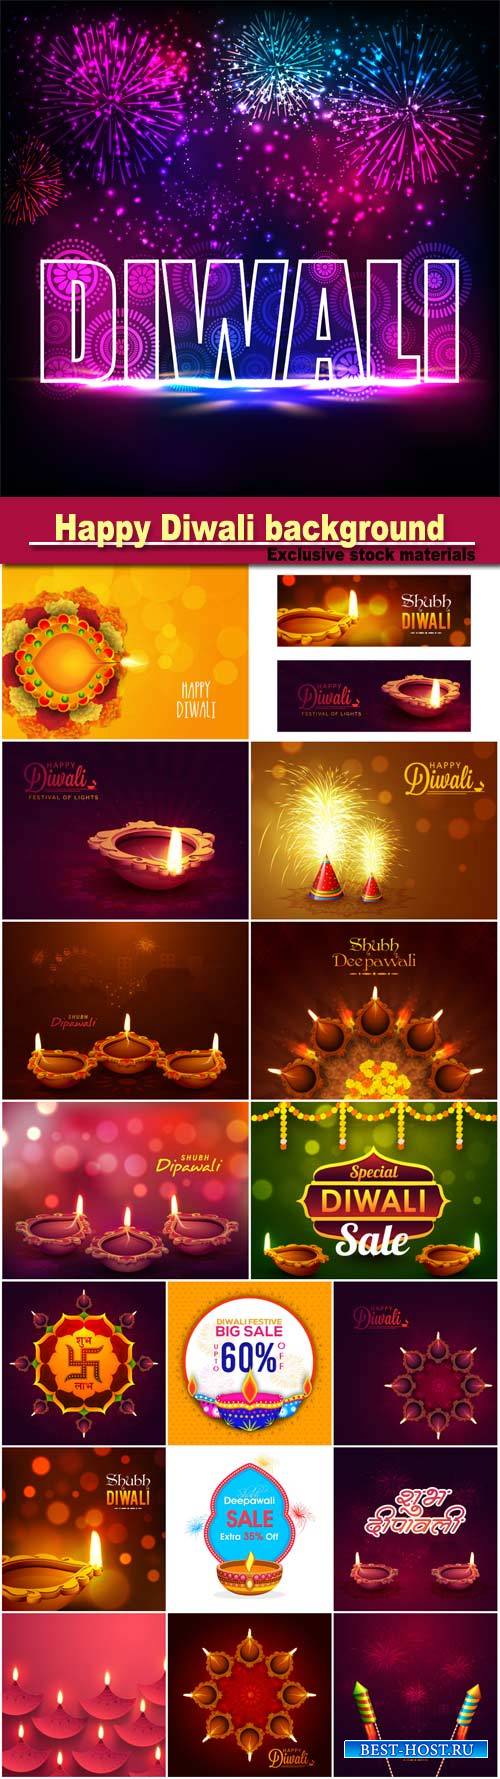 Happy Diwali celebration background